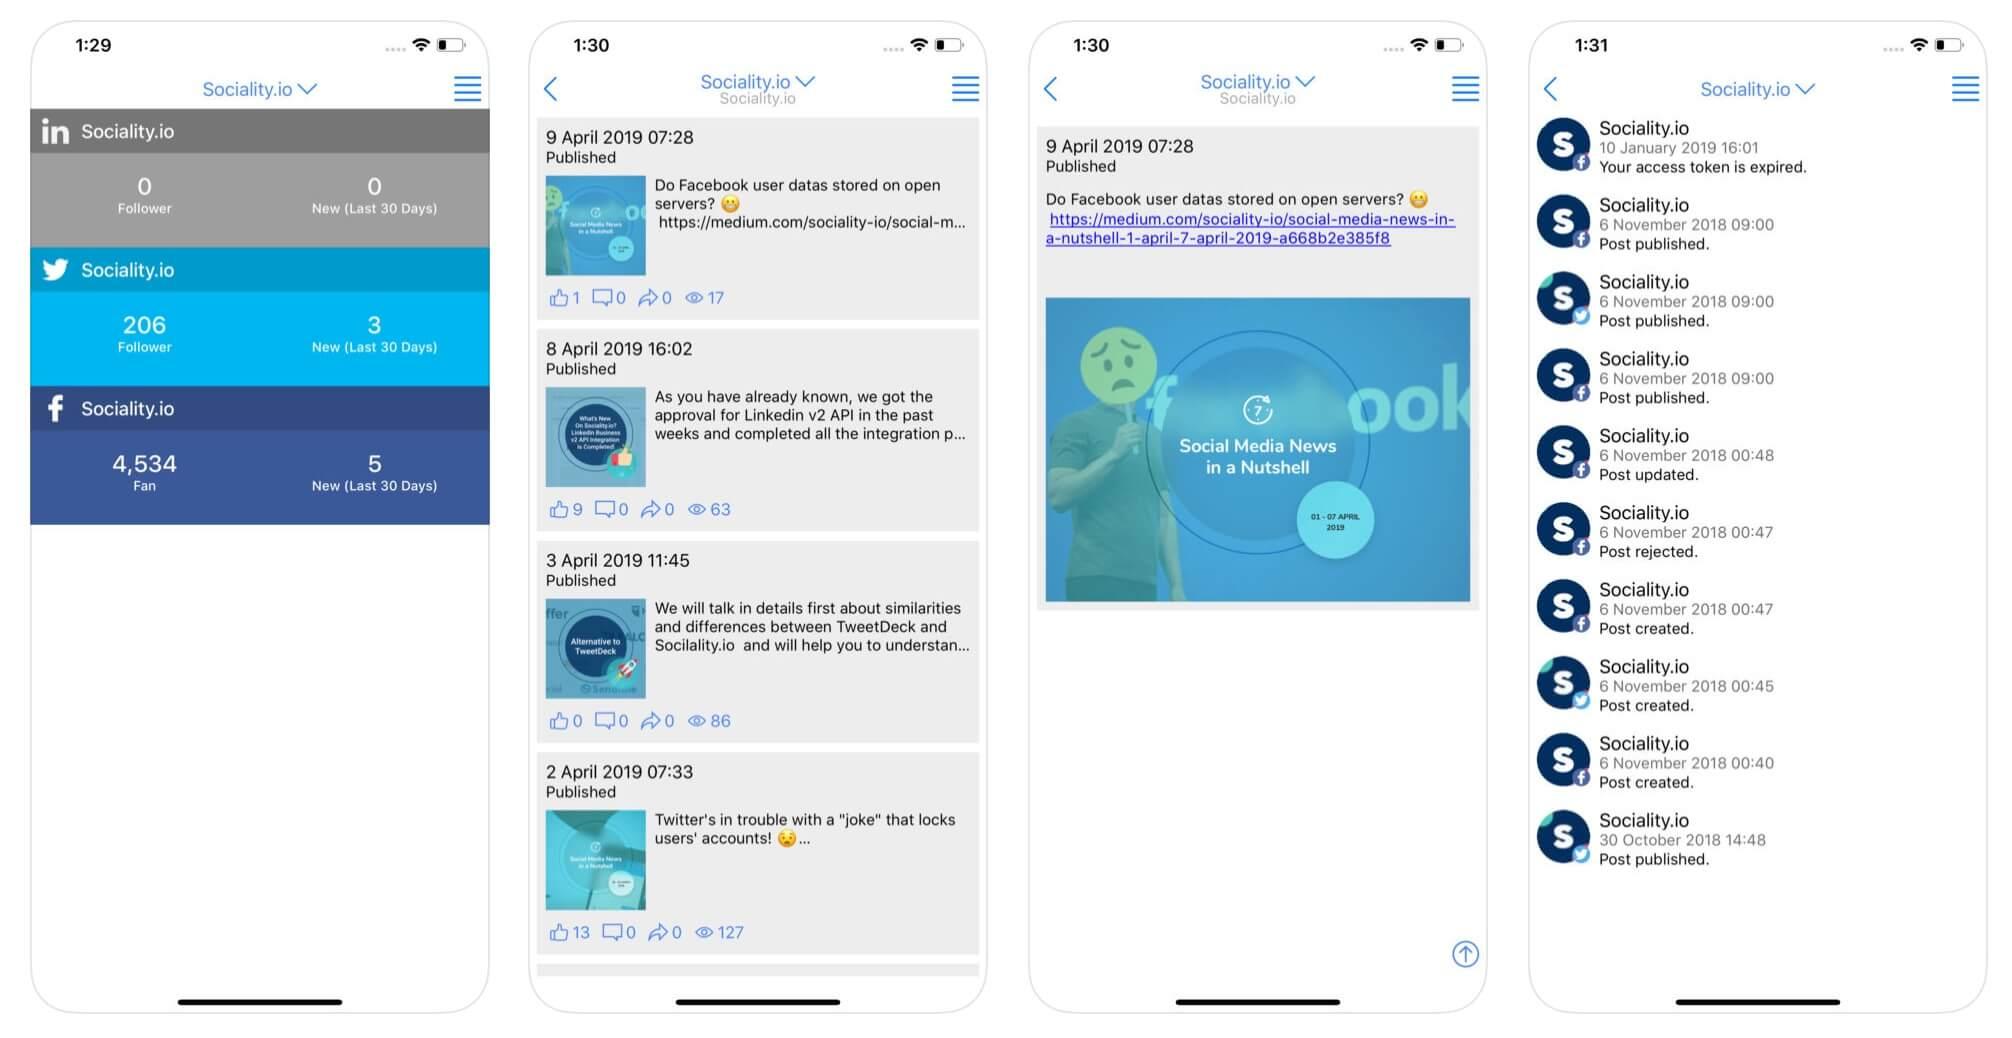 Sociality.io - Mobile Application